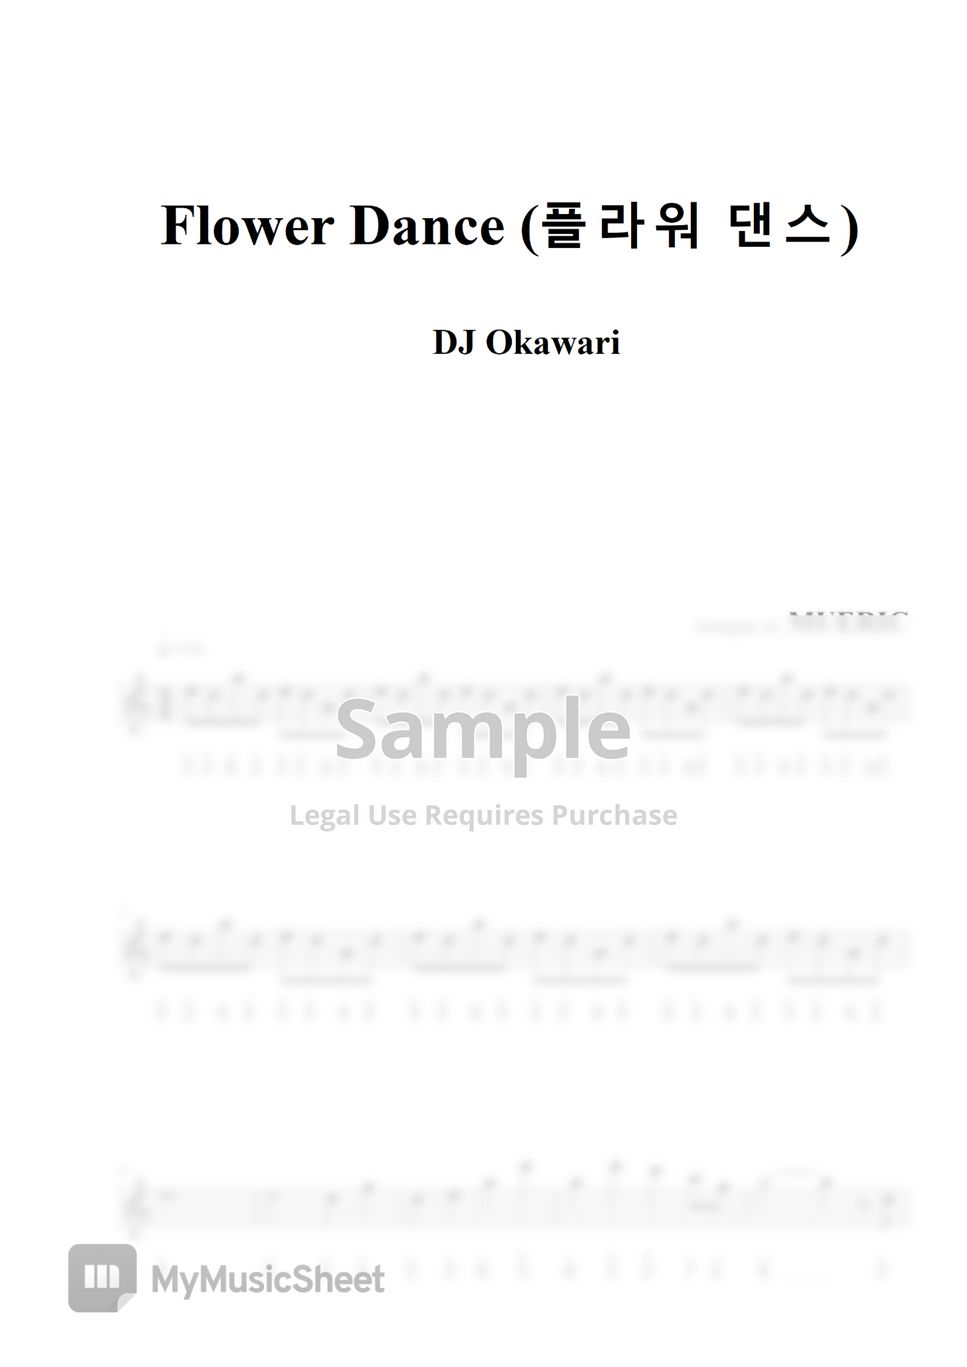 [Kalimba] DJ Okawari - Flower Dance by MUERIC